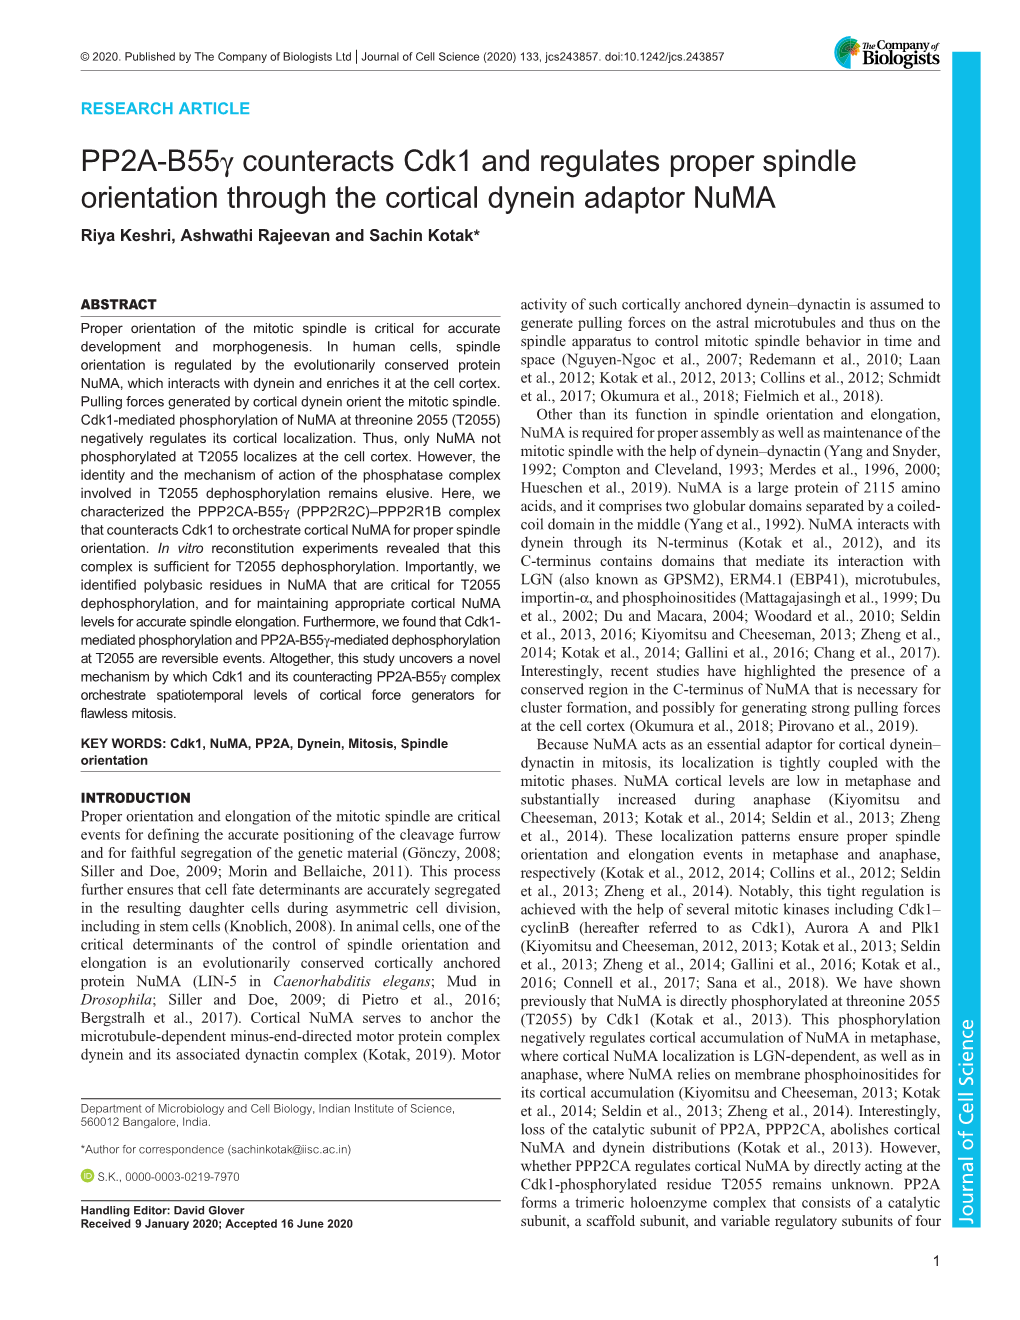 PP2A-B55γ Counteracts Cdk1 and Regulates Proper Spindle Orientation Through the Cortical Dynein Adaptor Numa Riya Keshri, Ashwathi Rajeevan and Sachin Kotak*